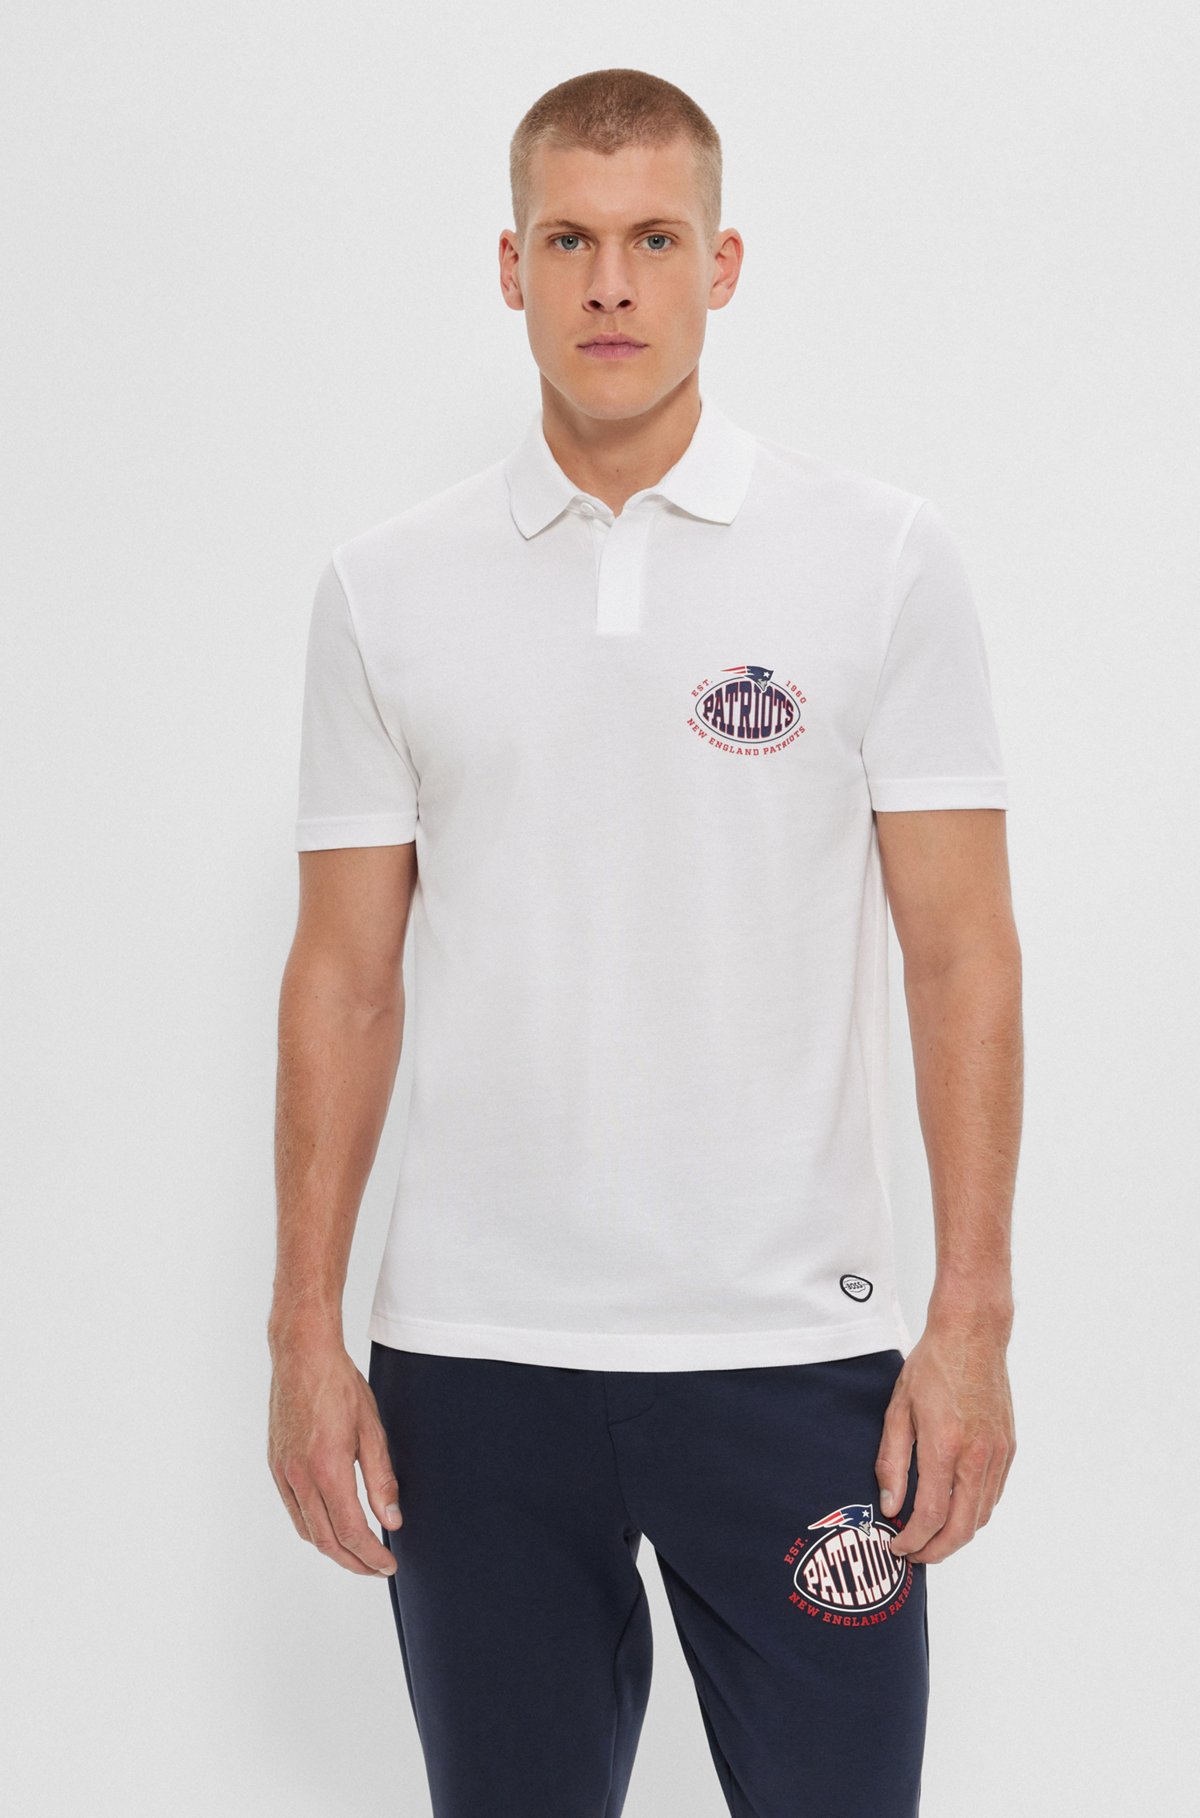 BOSS x NFL cotton-piqué polo shirt with collaborative branding, Patriots